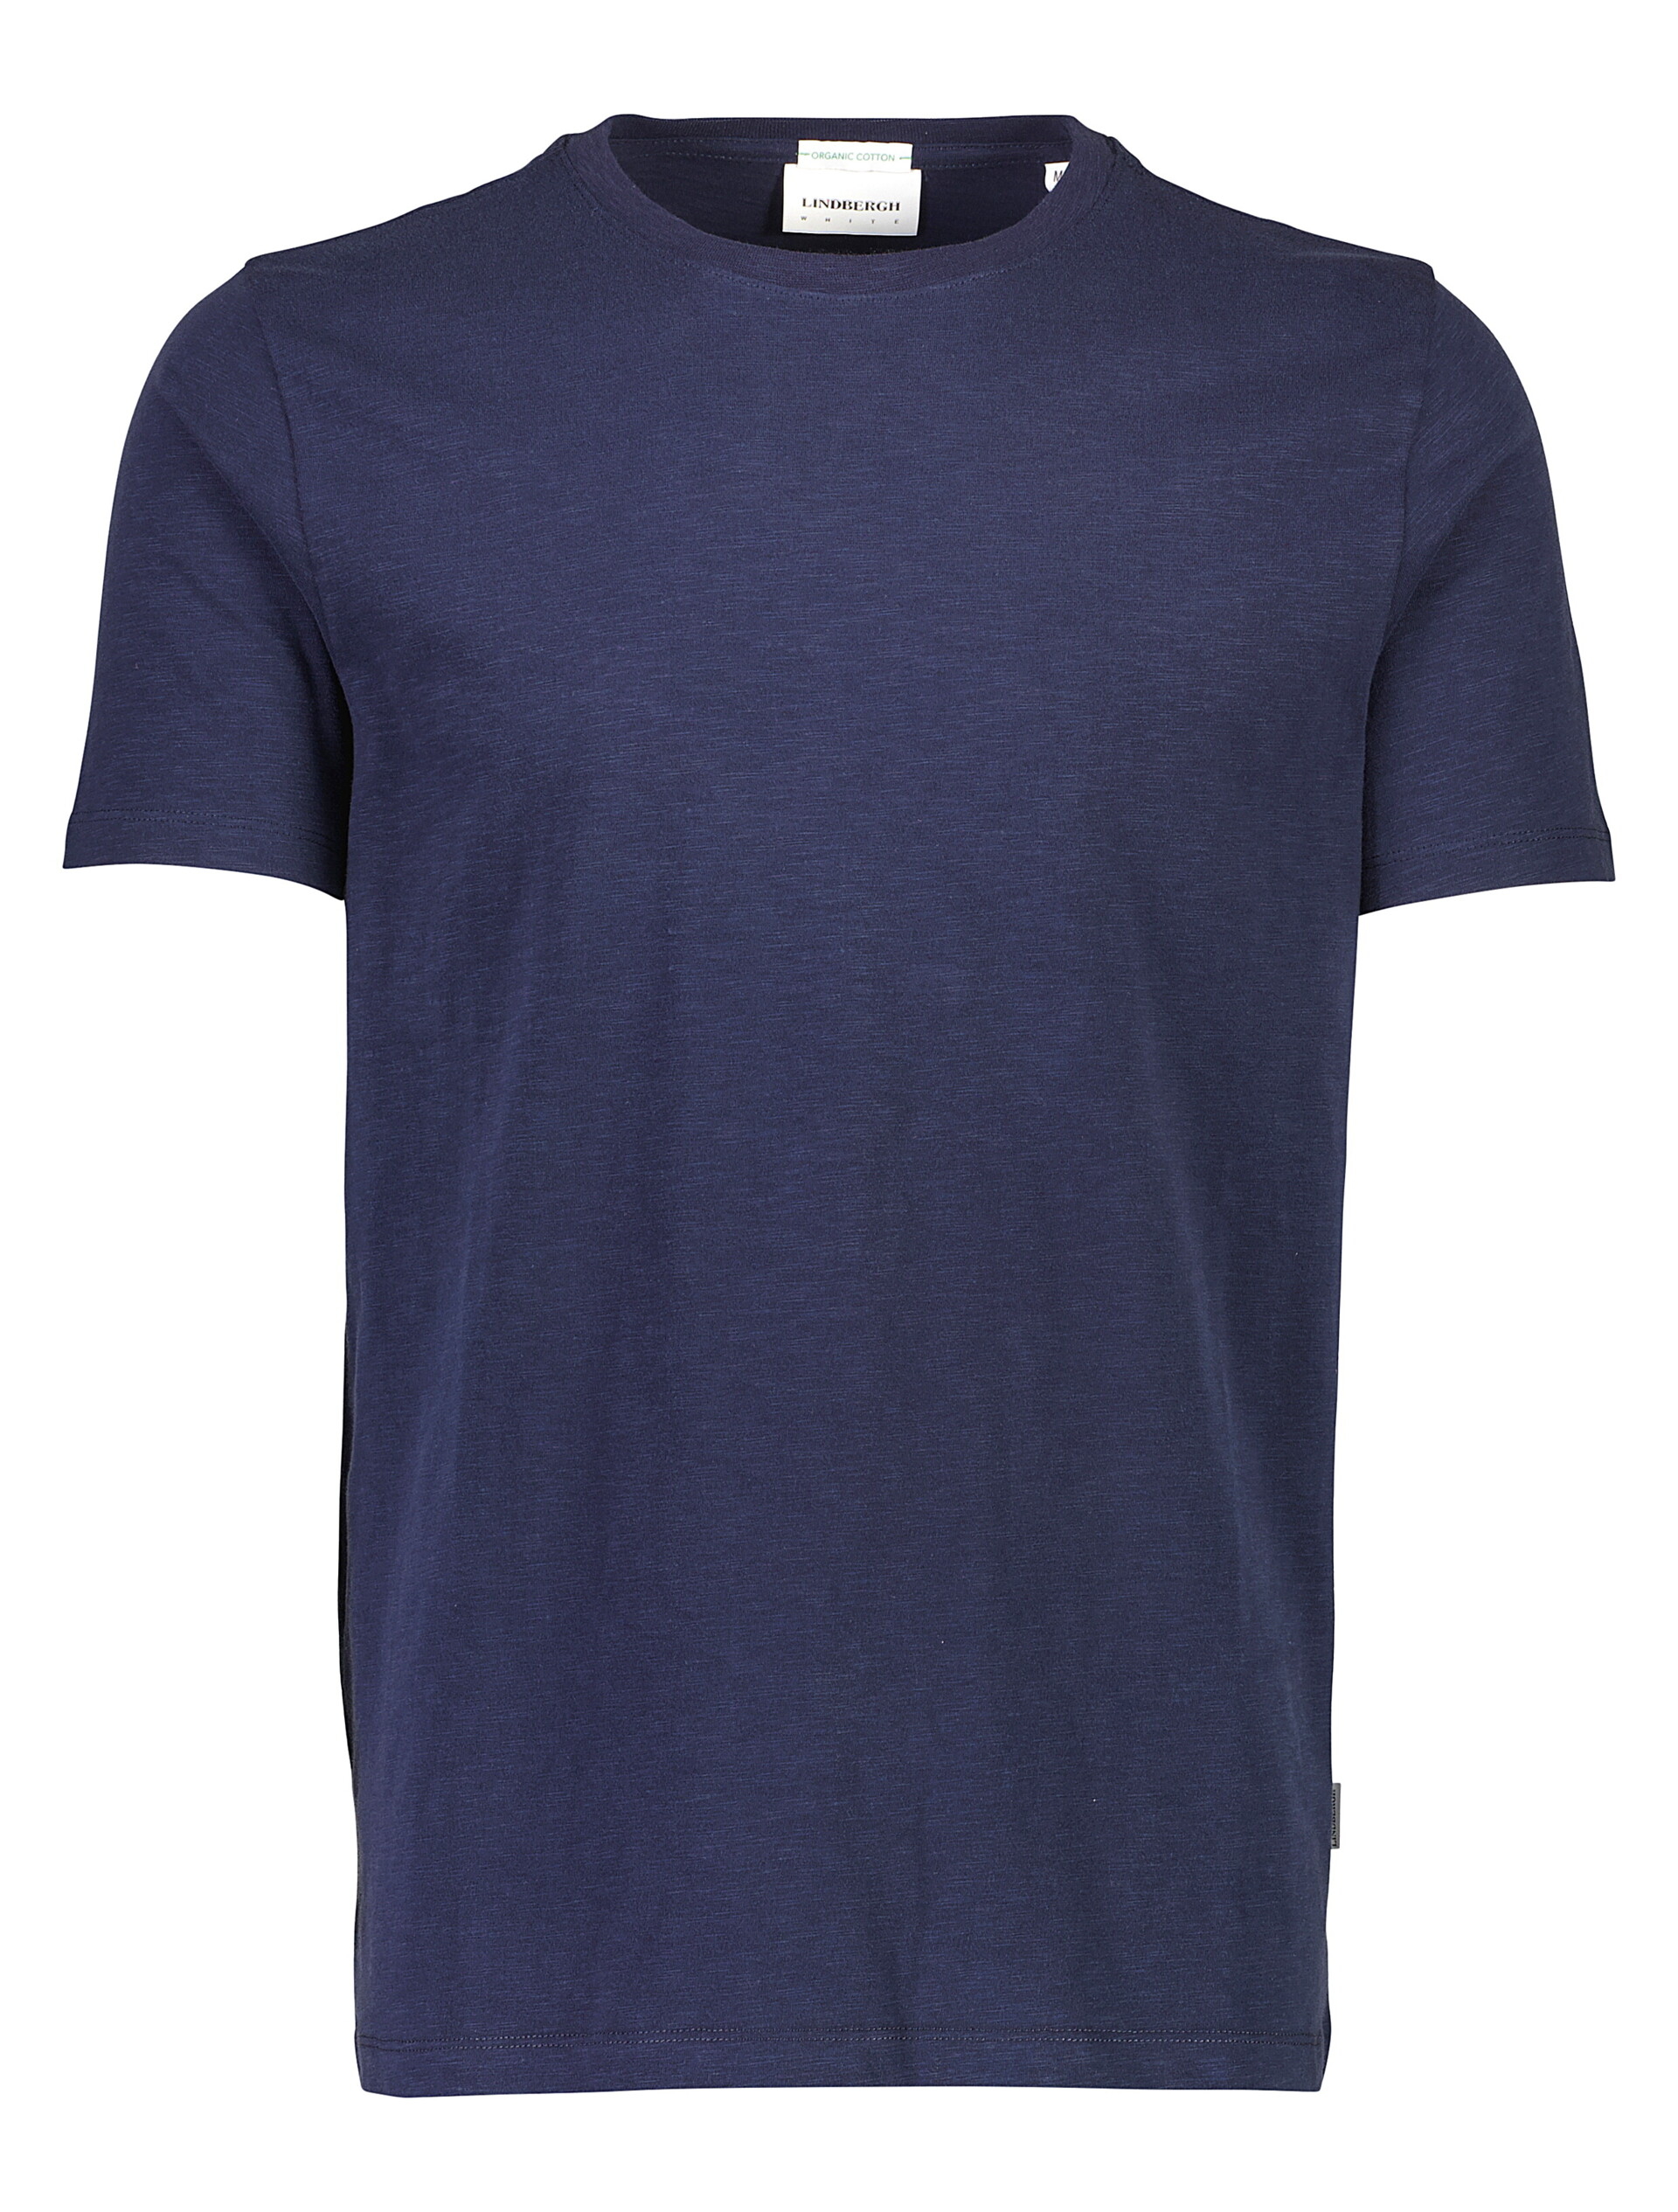 Lindbergh T-shirt blau / navy